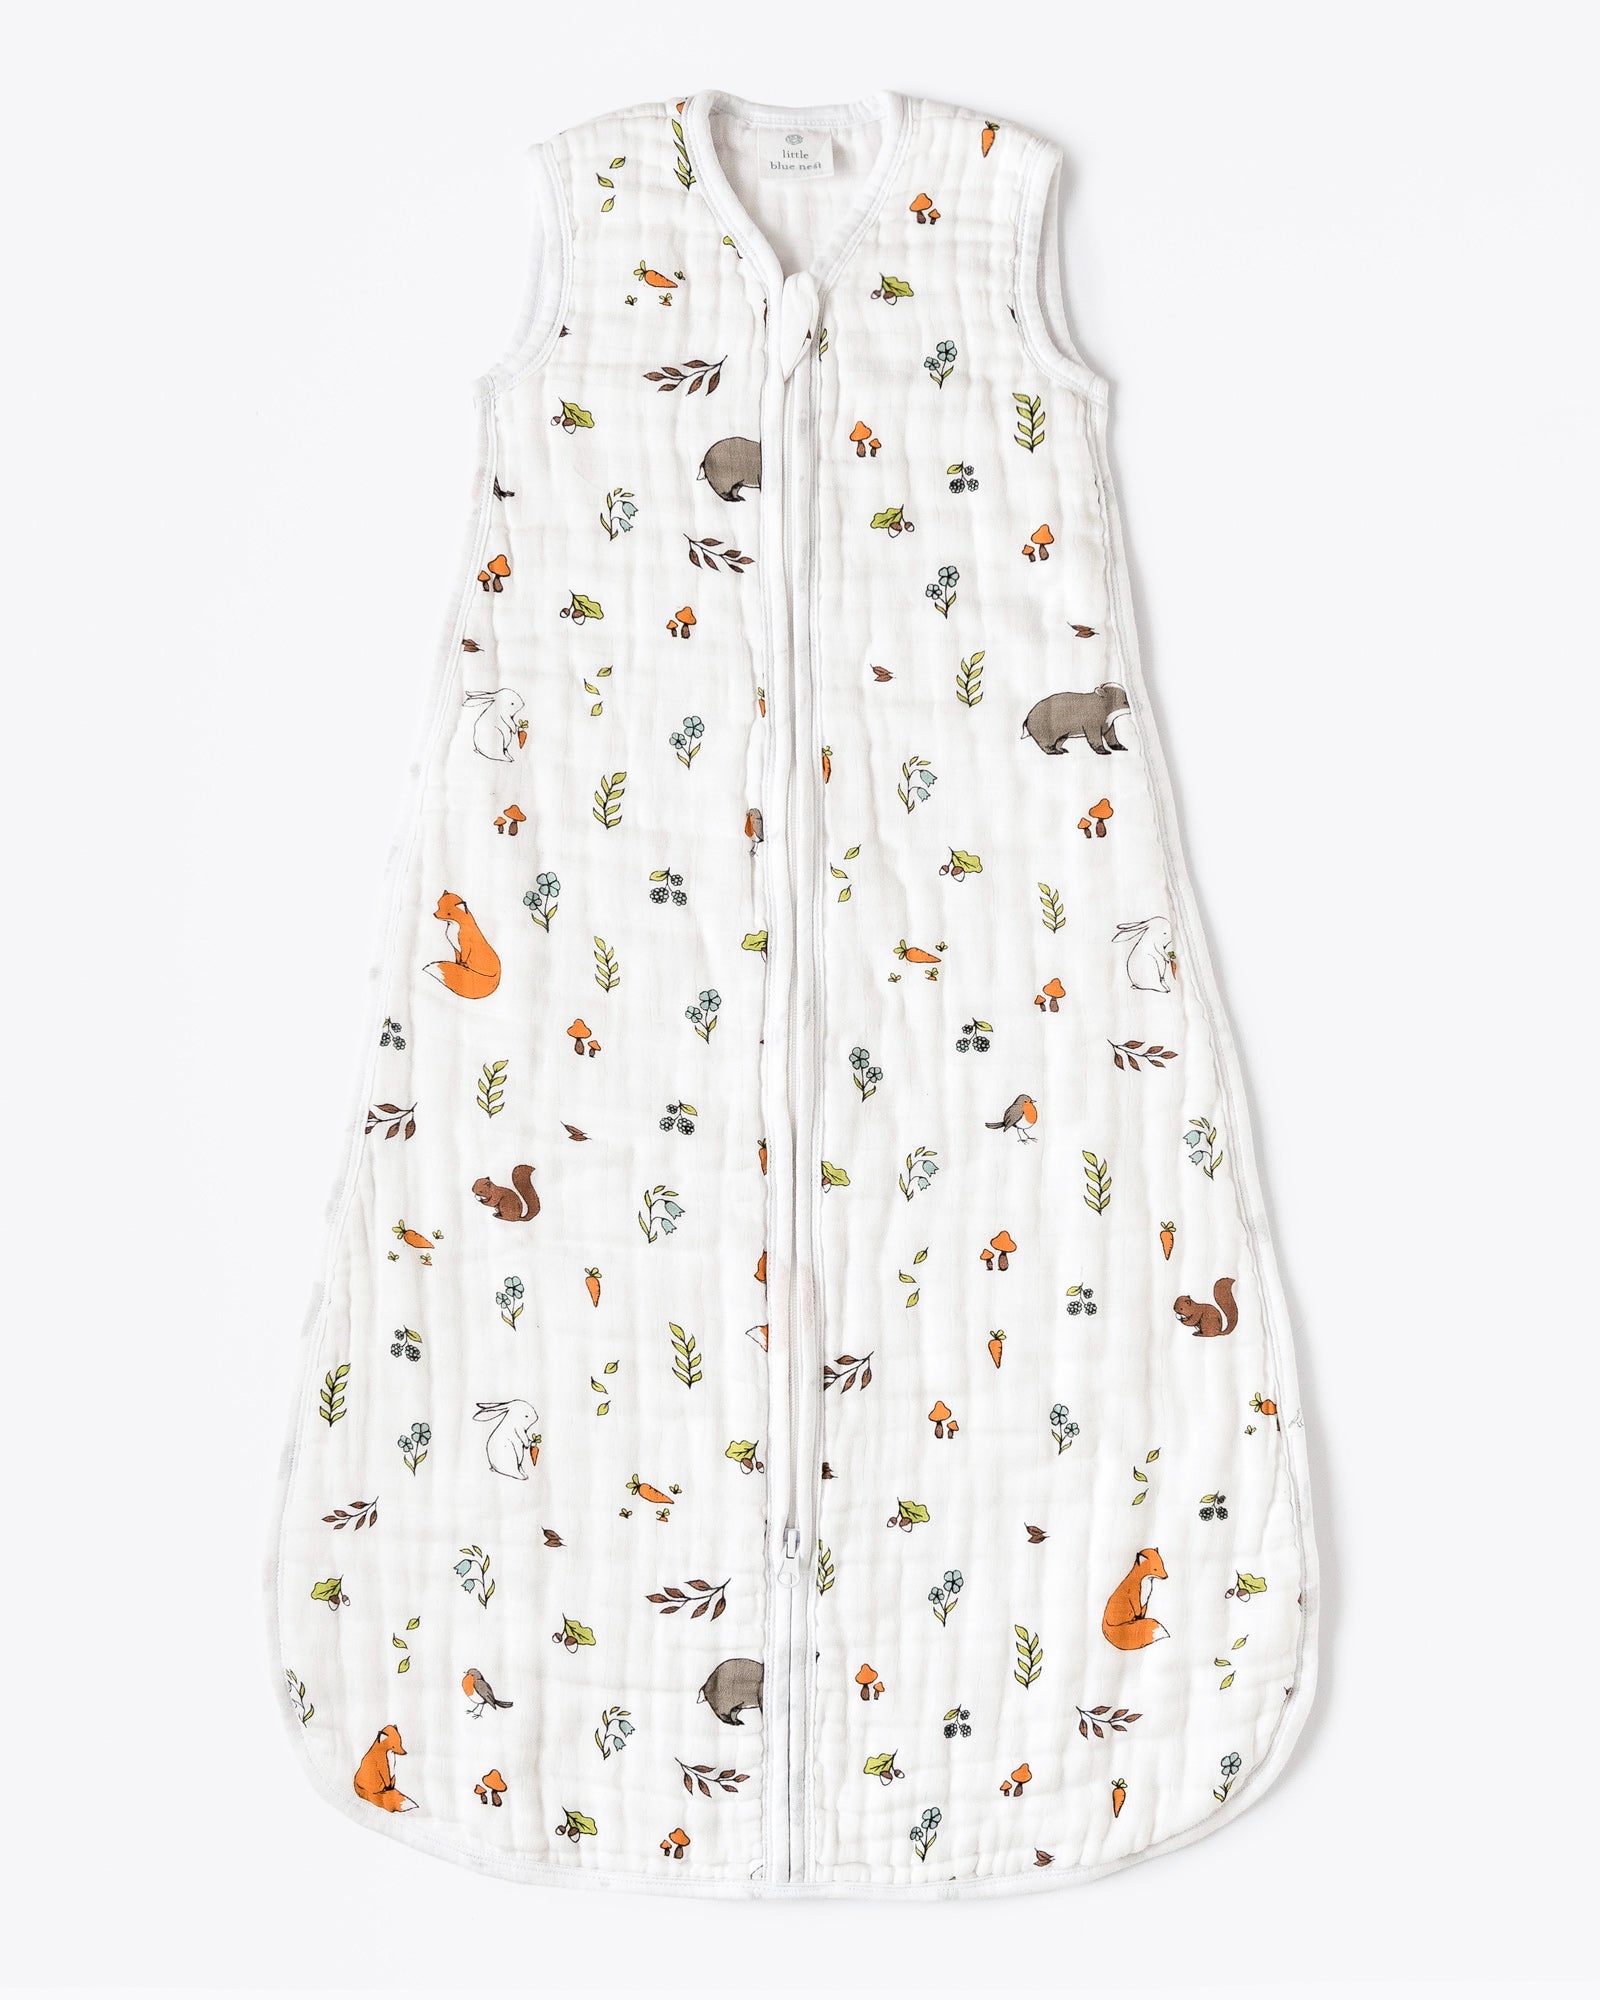 Organic cotton muslin baby sleeping bag 1.5 tog with woodland pattern